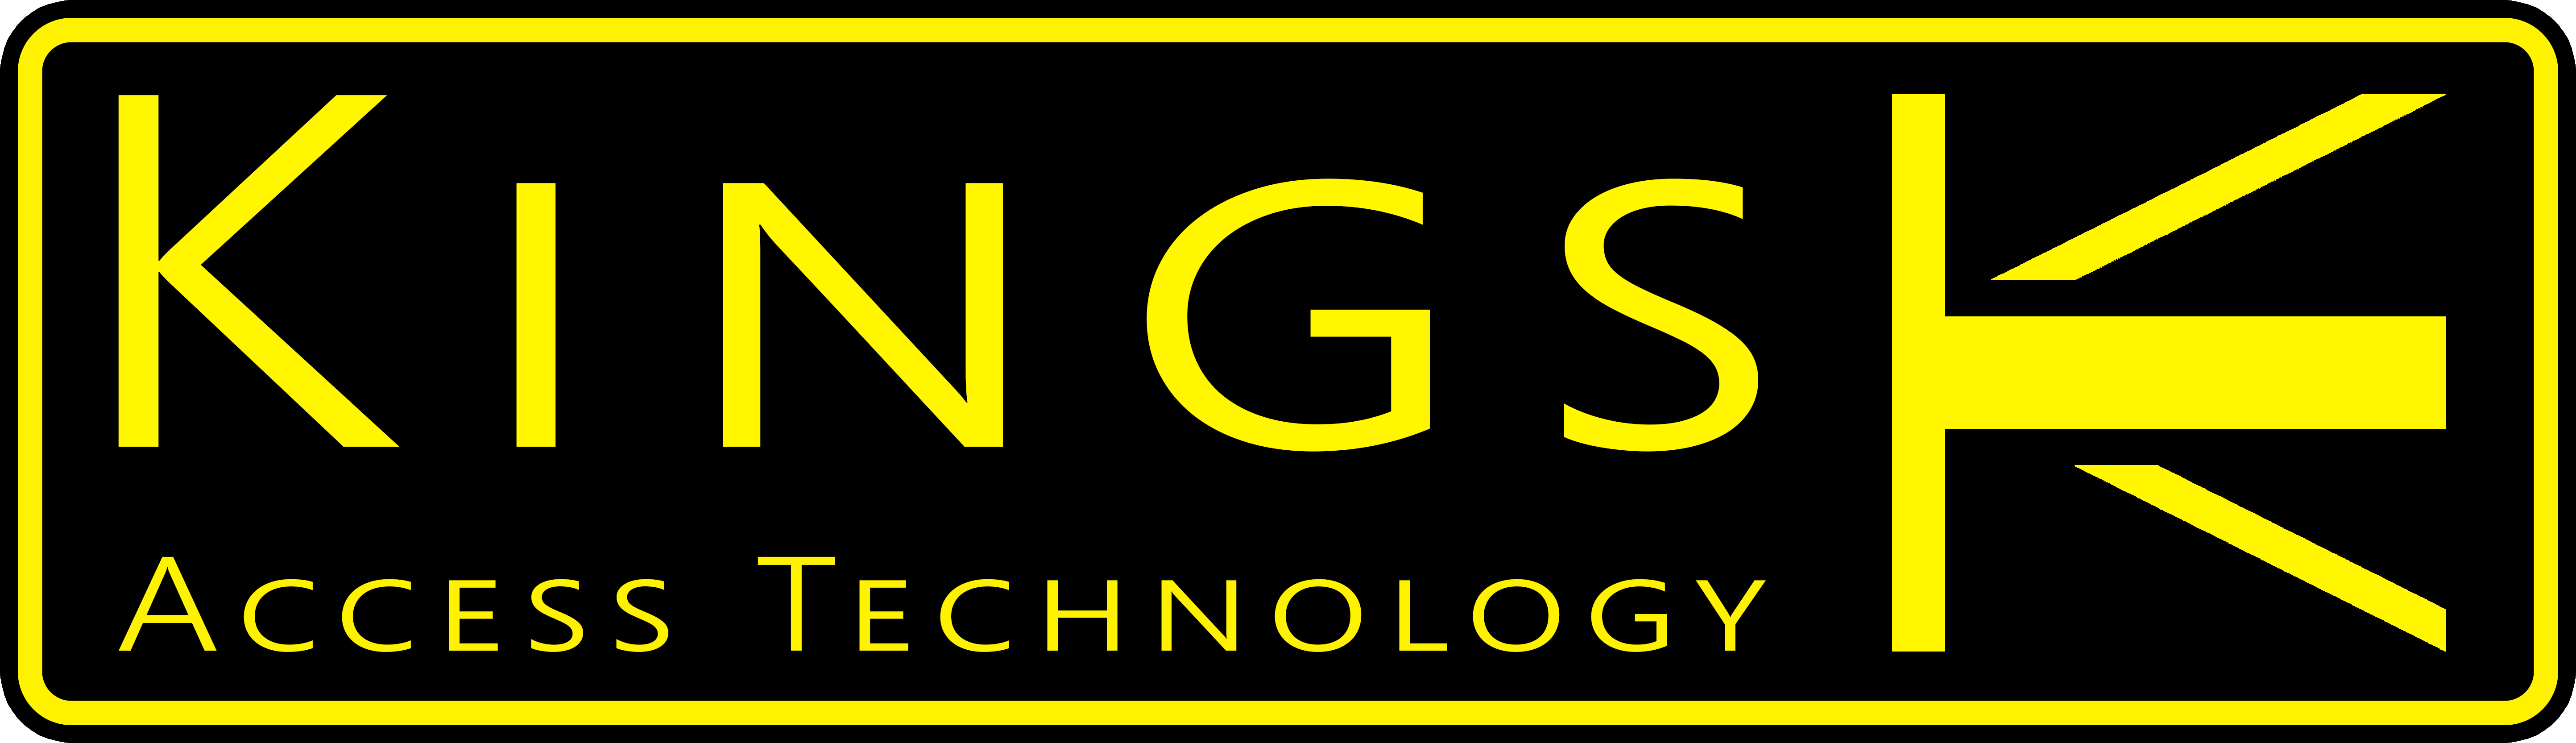 Kings Access Technology logo